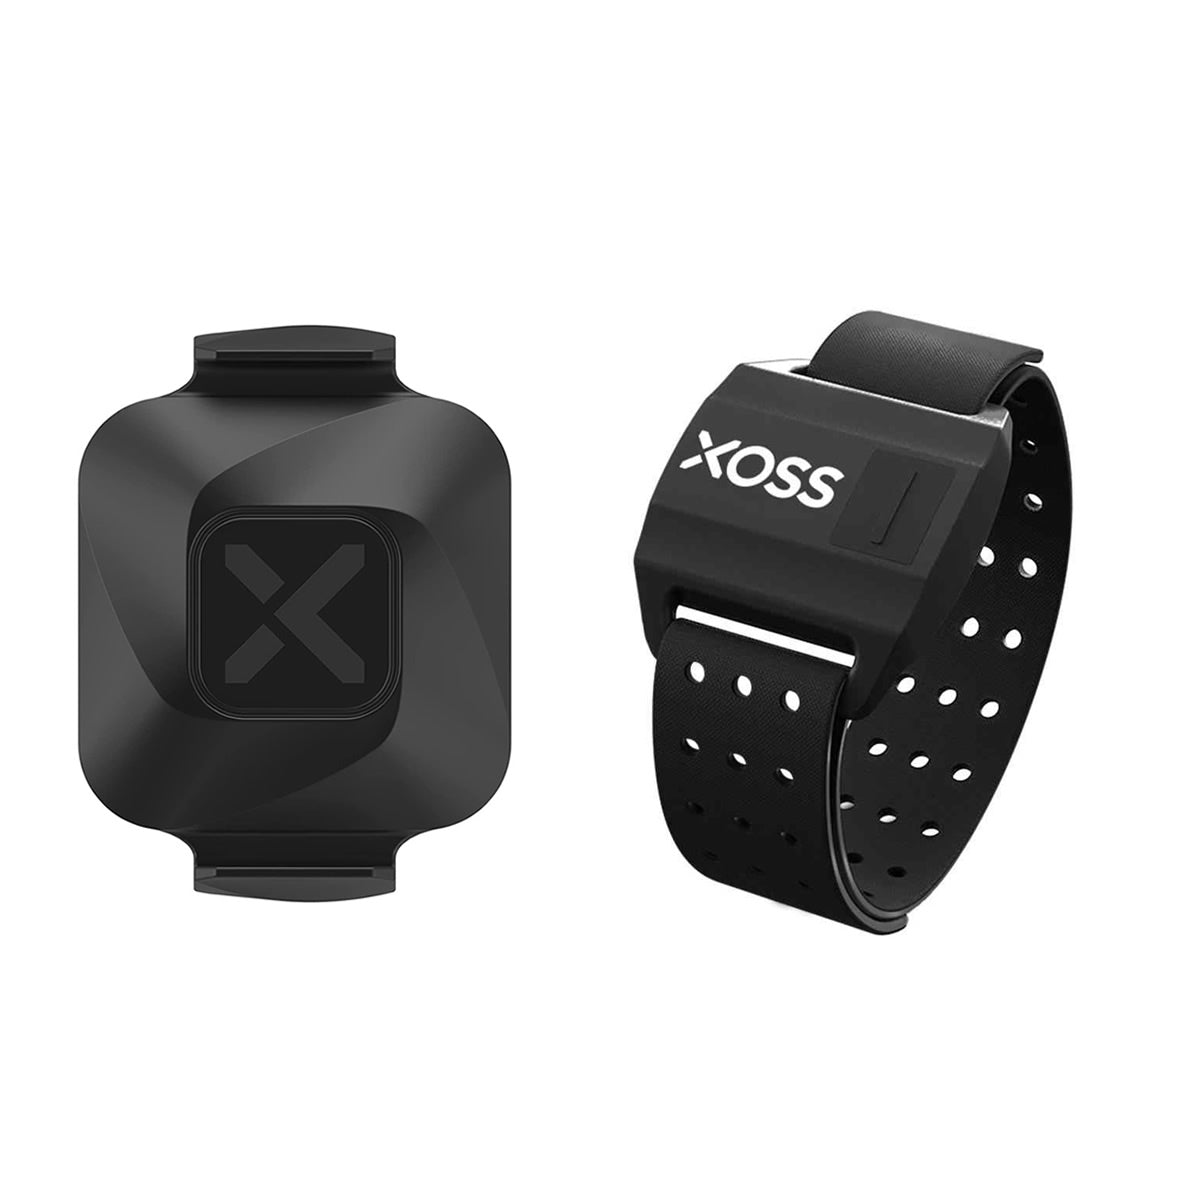 [Combo] XOSS "Vortex" Cadence/Speed Sensor & Arm Band Heart Rate Monitor - XOSS.CO